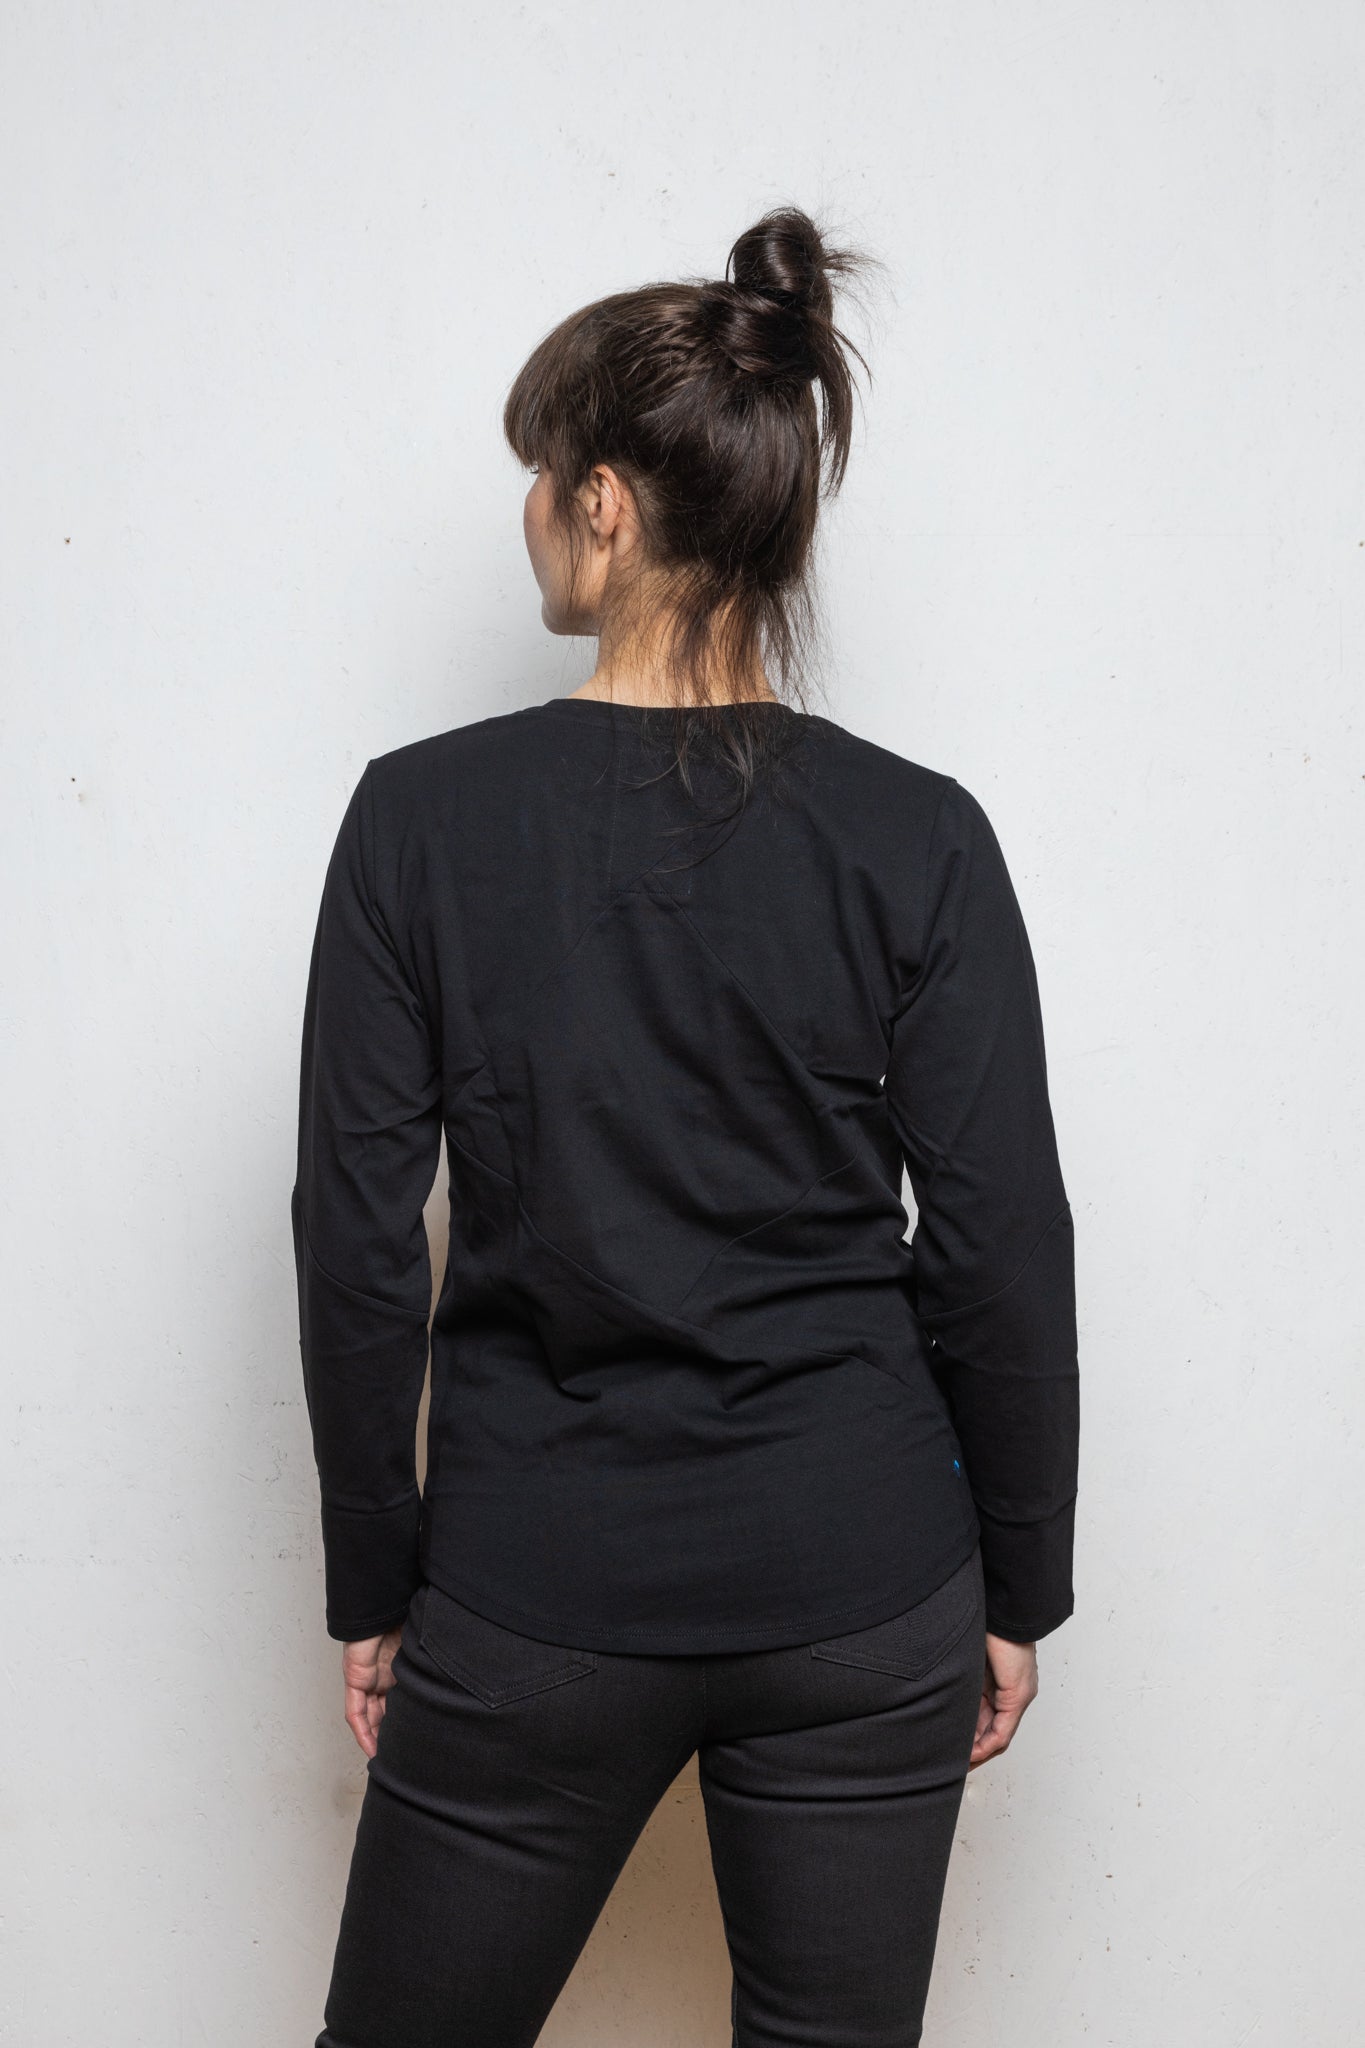 Up-shirt for women, long sleeves | Black, grey - Reet Aus